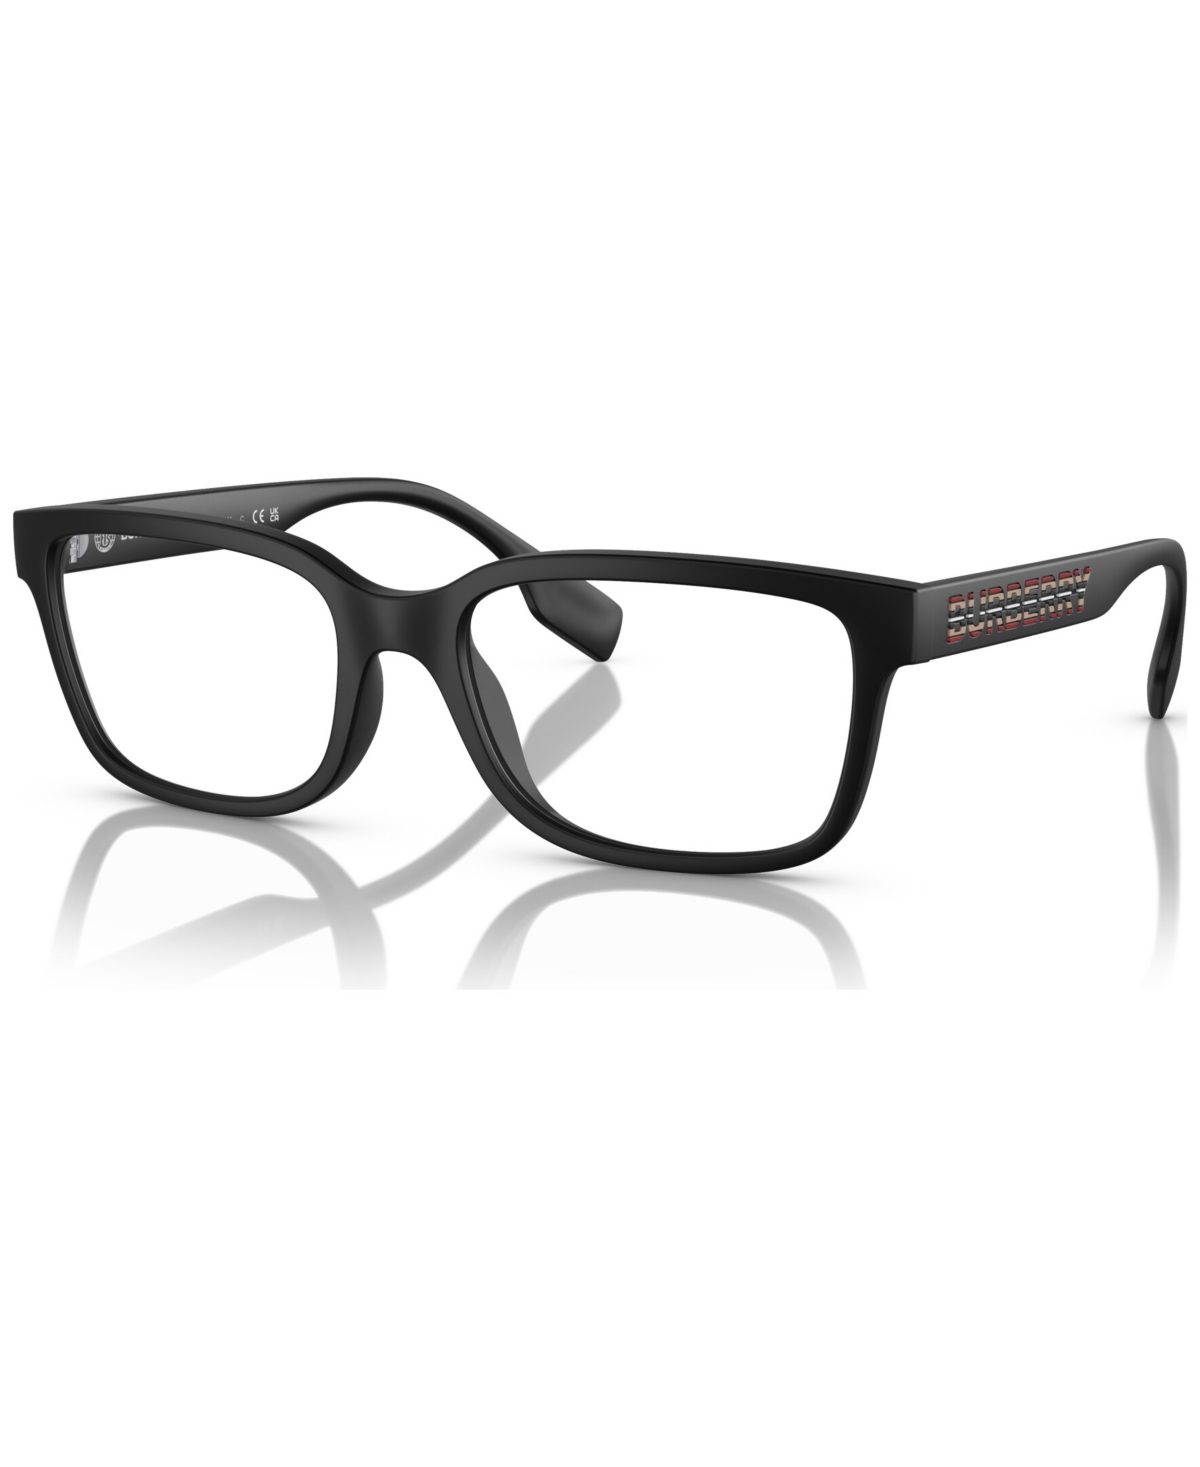 Men's Square Eyeglasses, BE2379U 57 - Matte Black